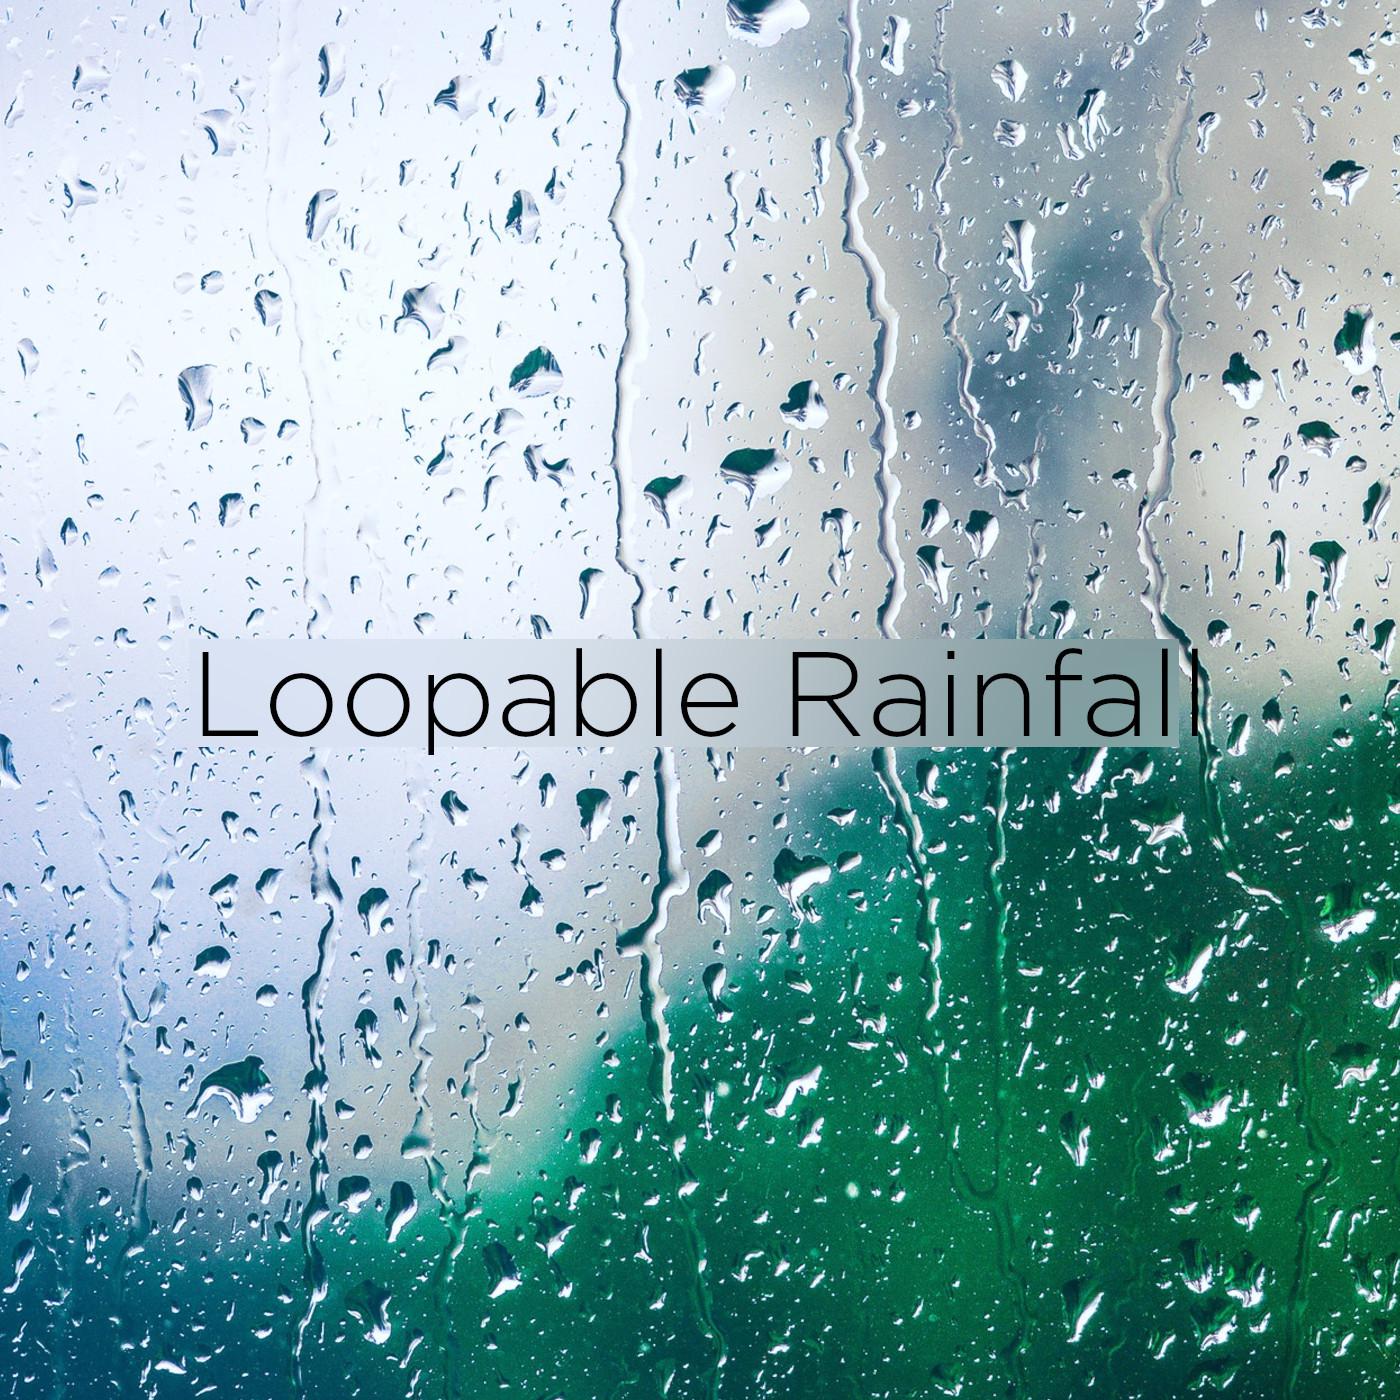 Loopable Rainfall